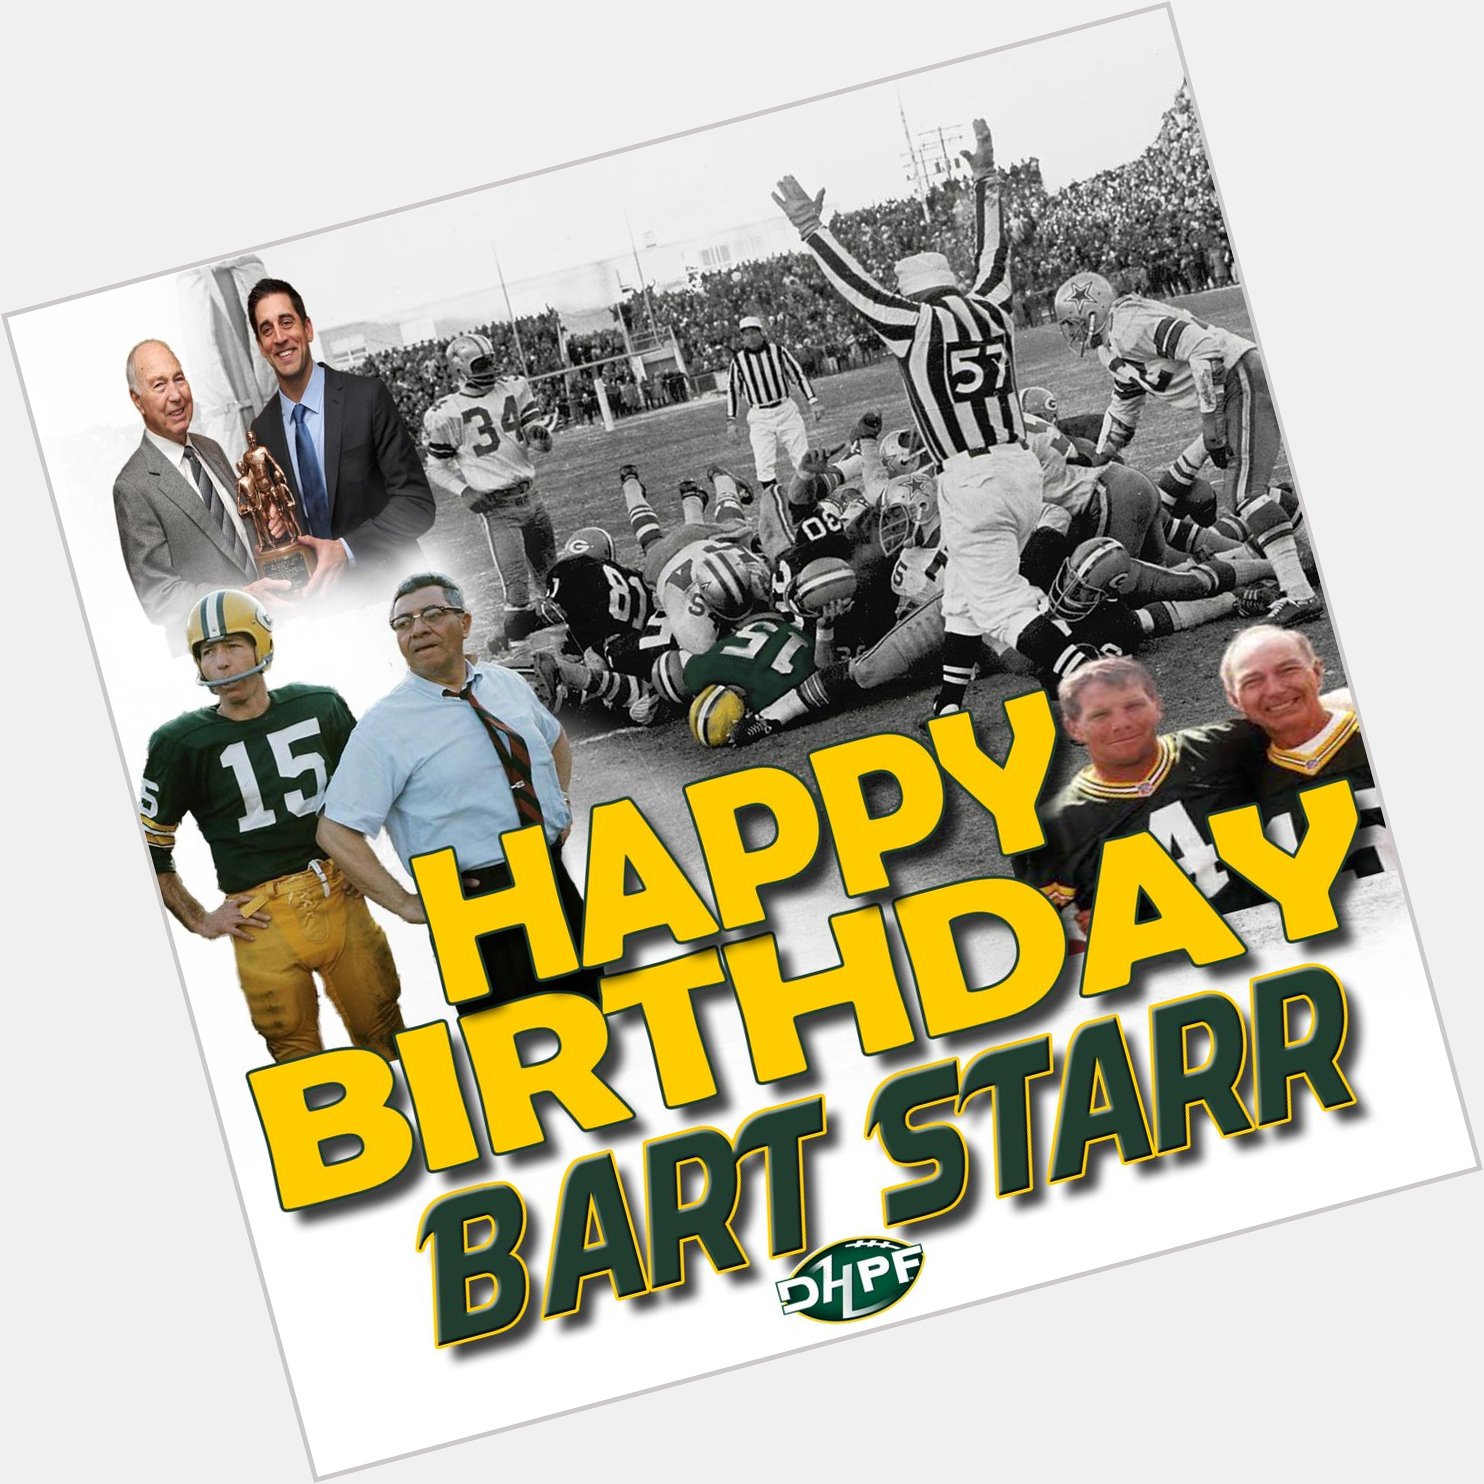 Happy 85th Birthday Bart Starr!      